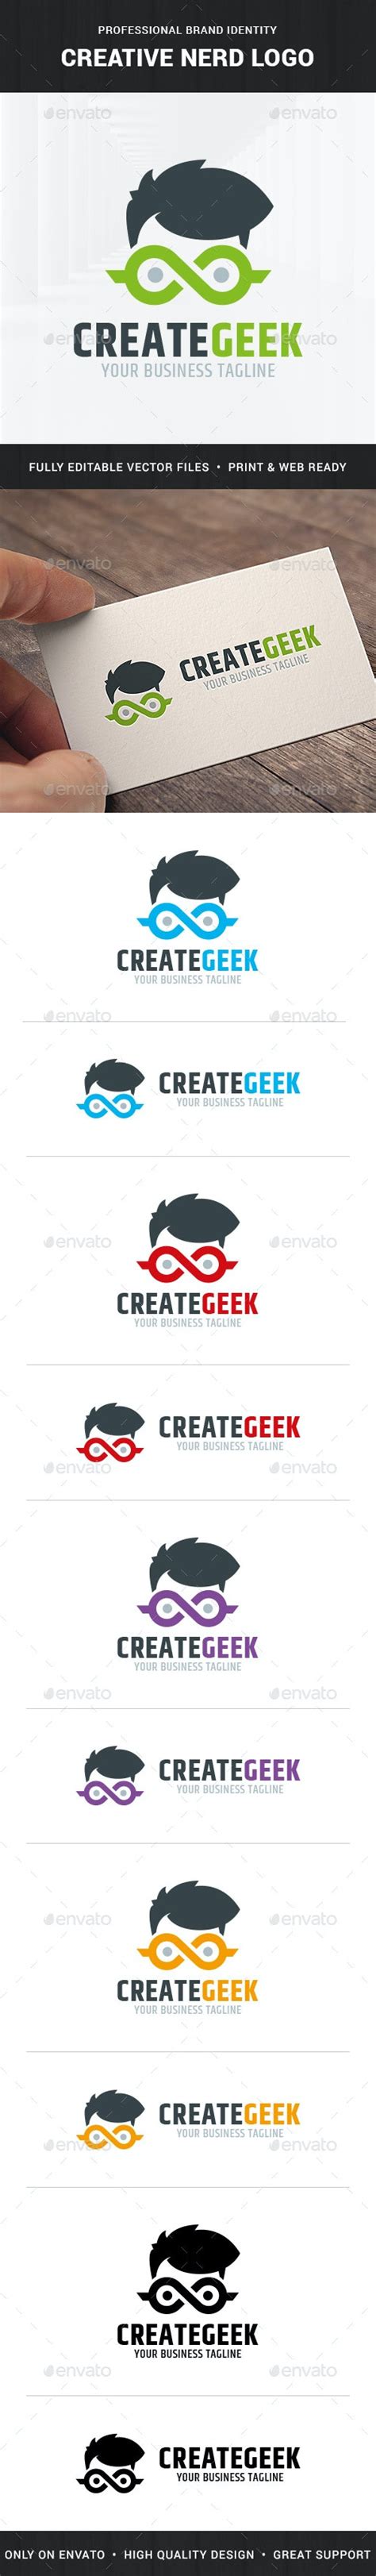 Creative Nerd Logo Template By Liveatthebbq Graphicriver